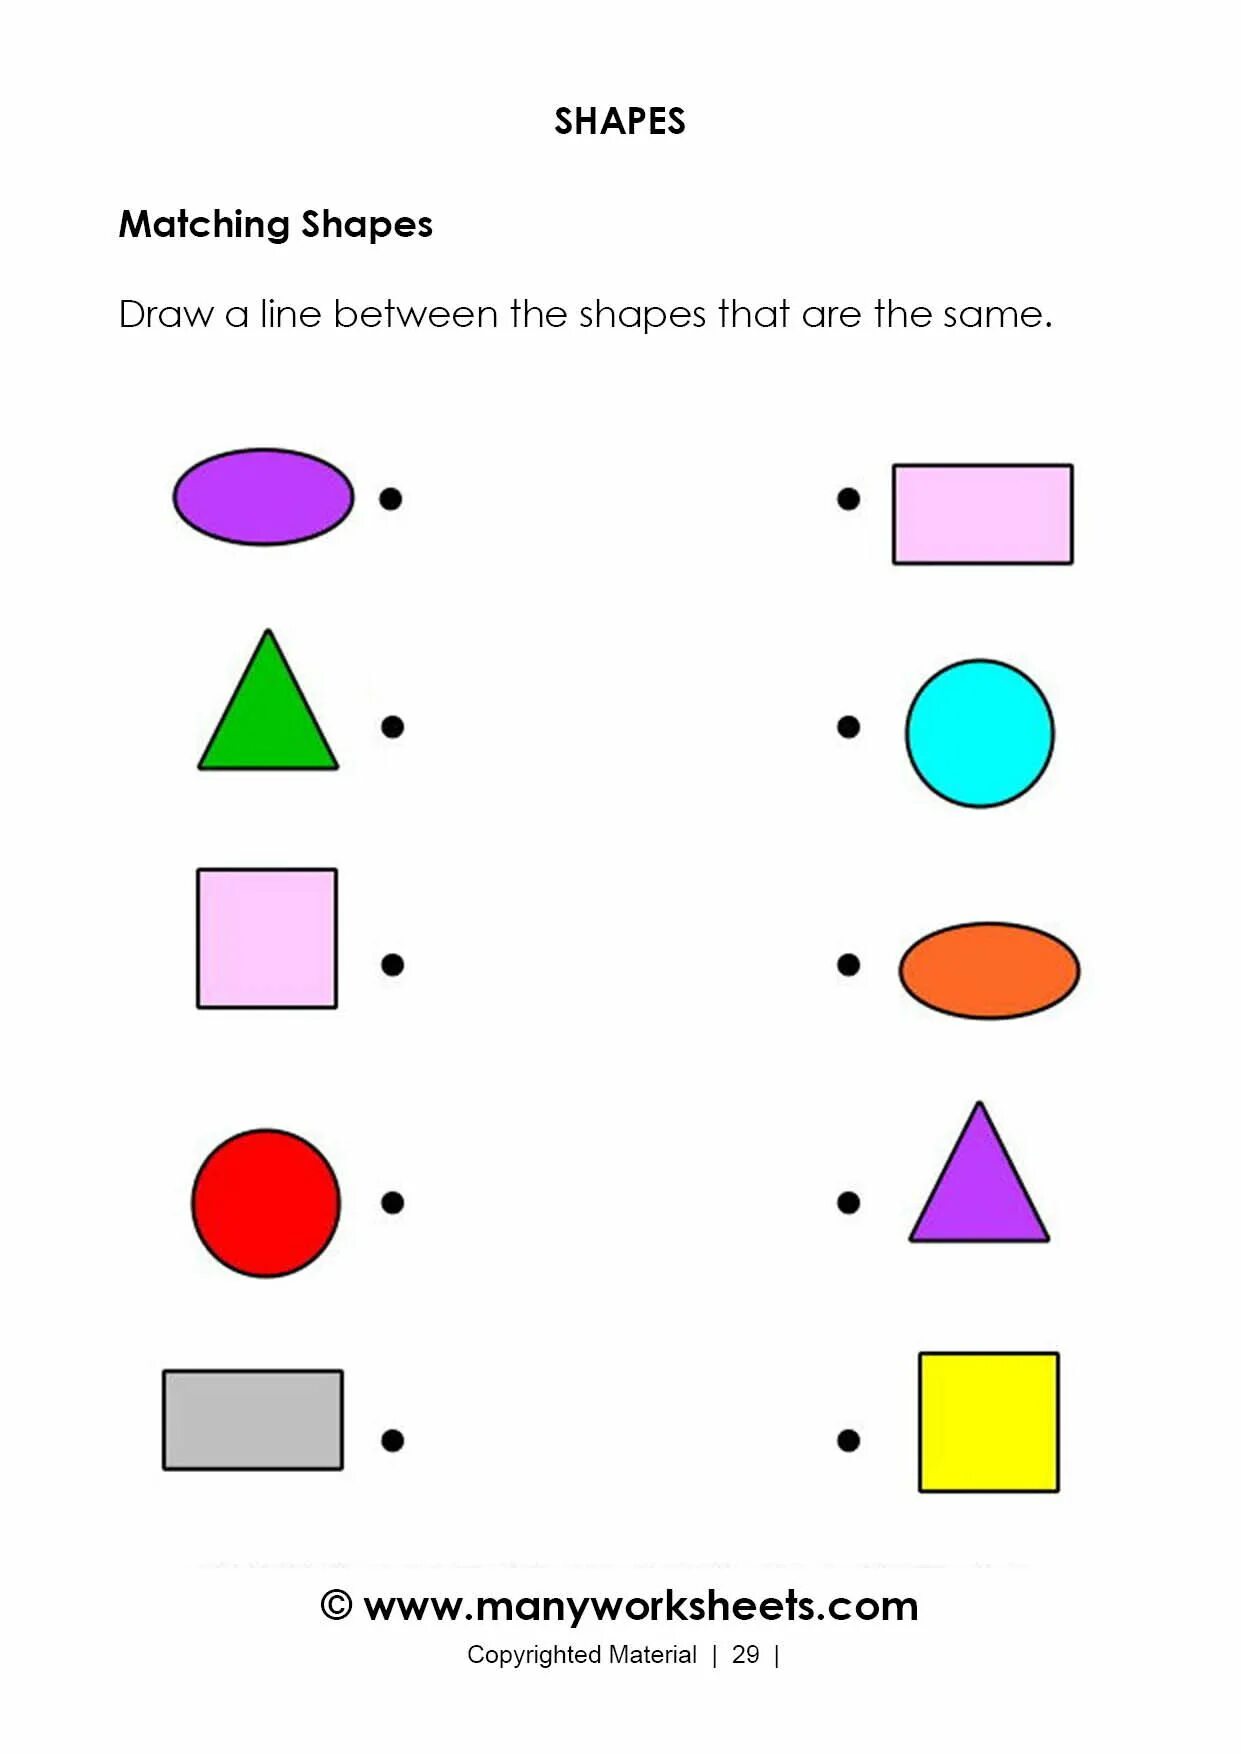 Shape matching. Shapes Worksheets. Matching Shapes Worksheets. Shapes Worksheets for Kids. English Shapes Worksheet.